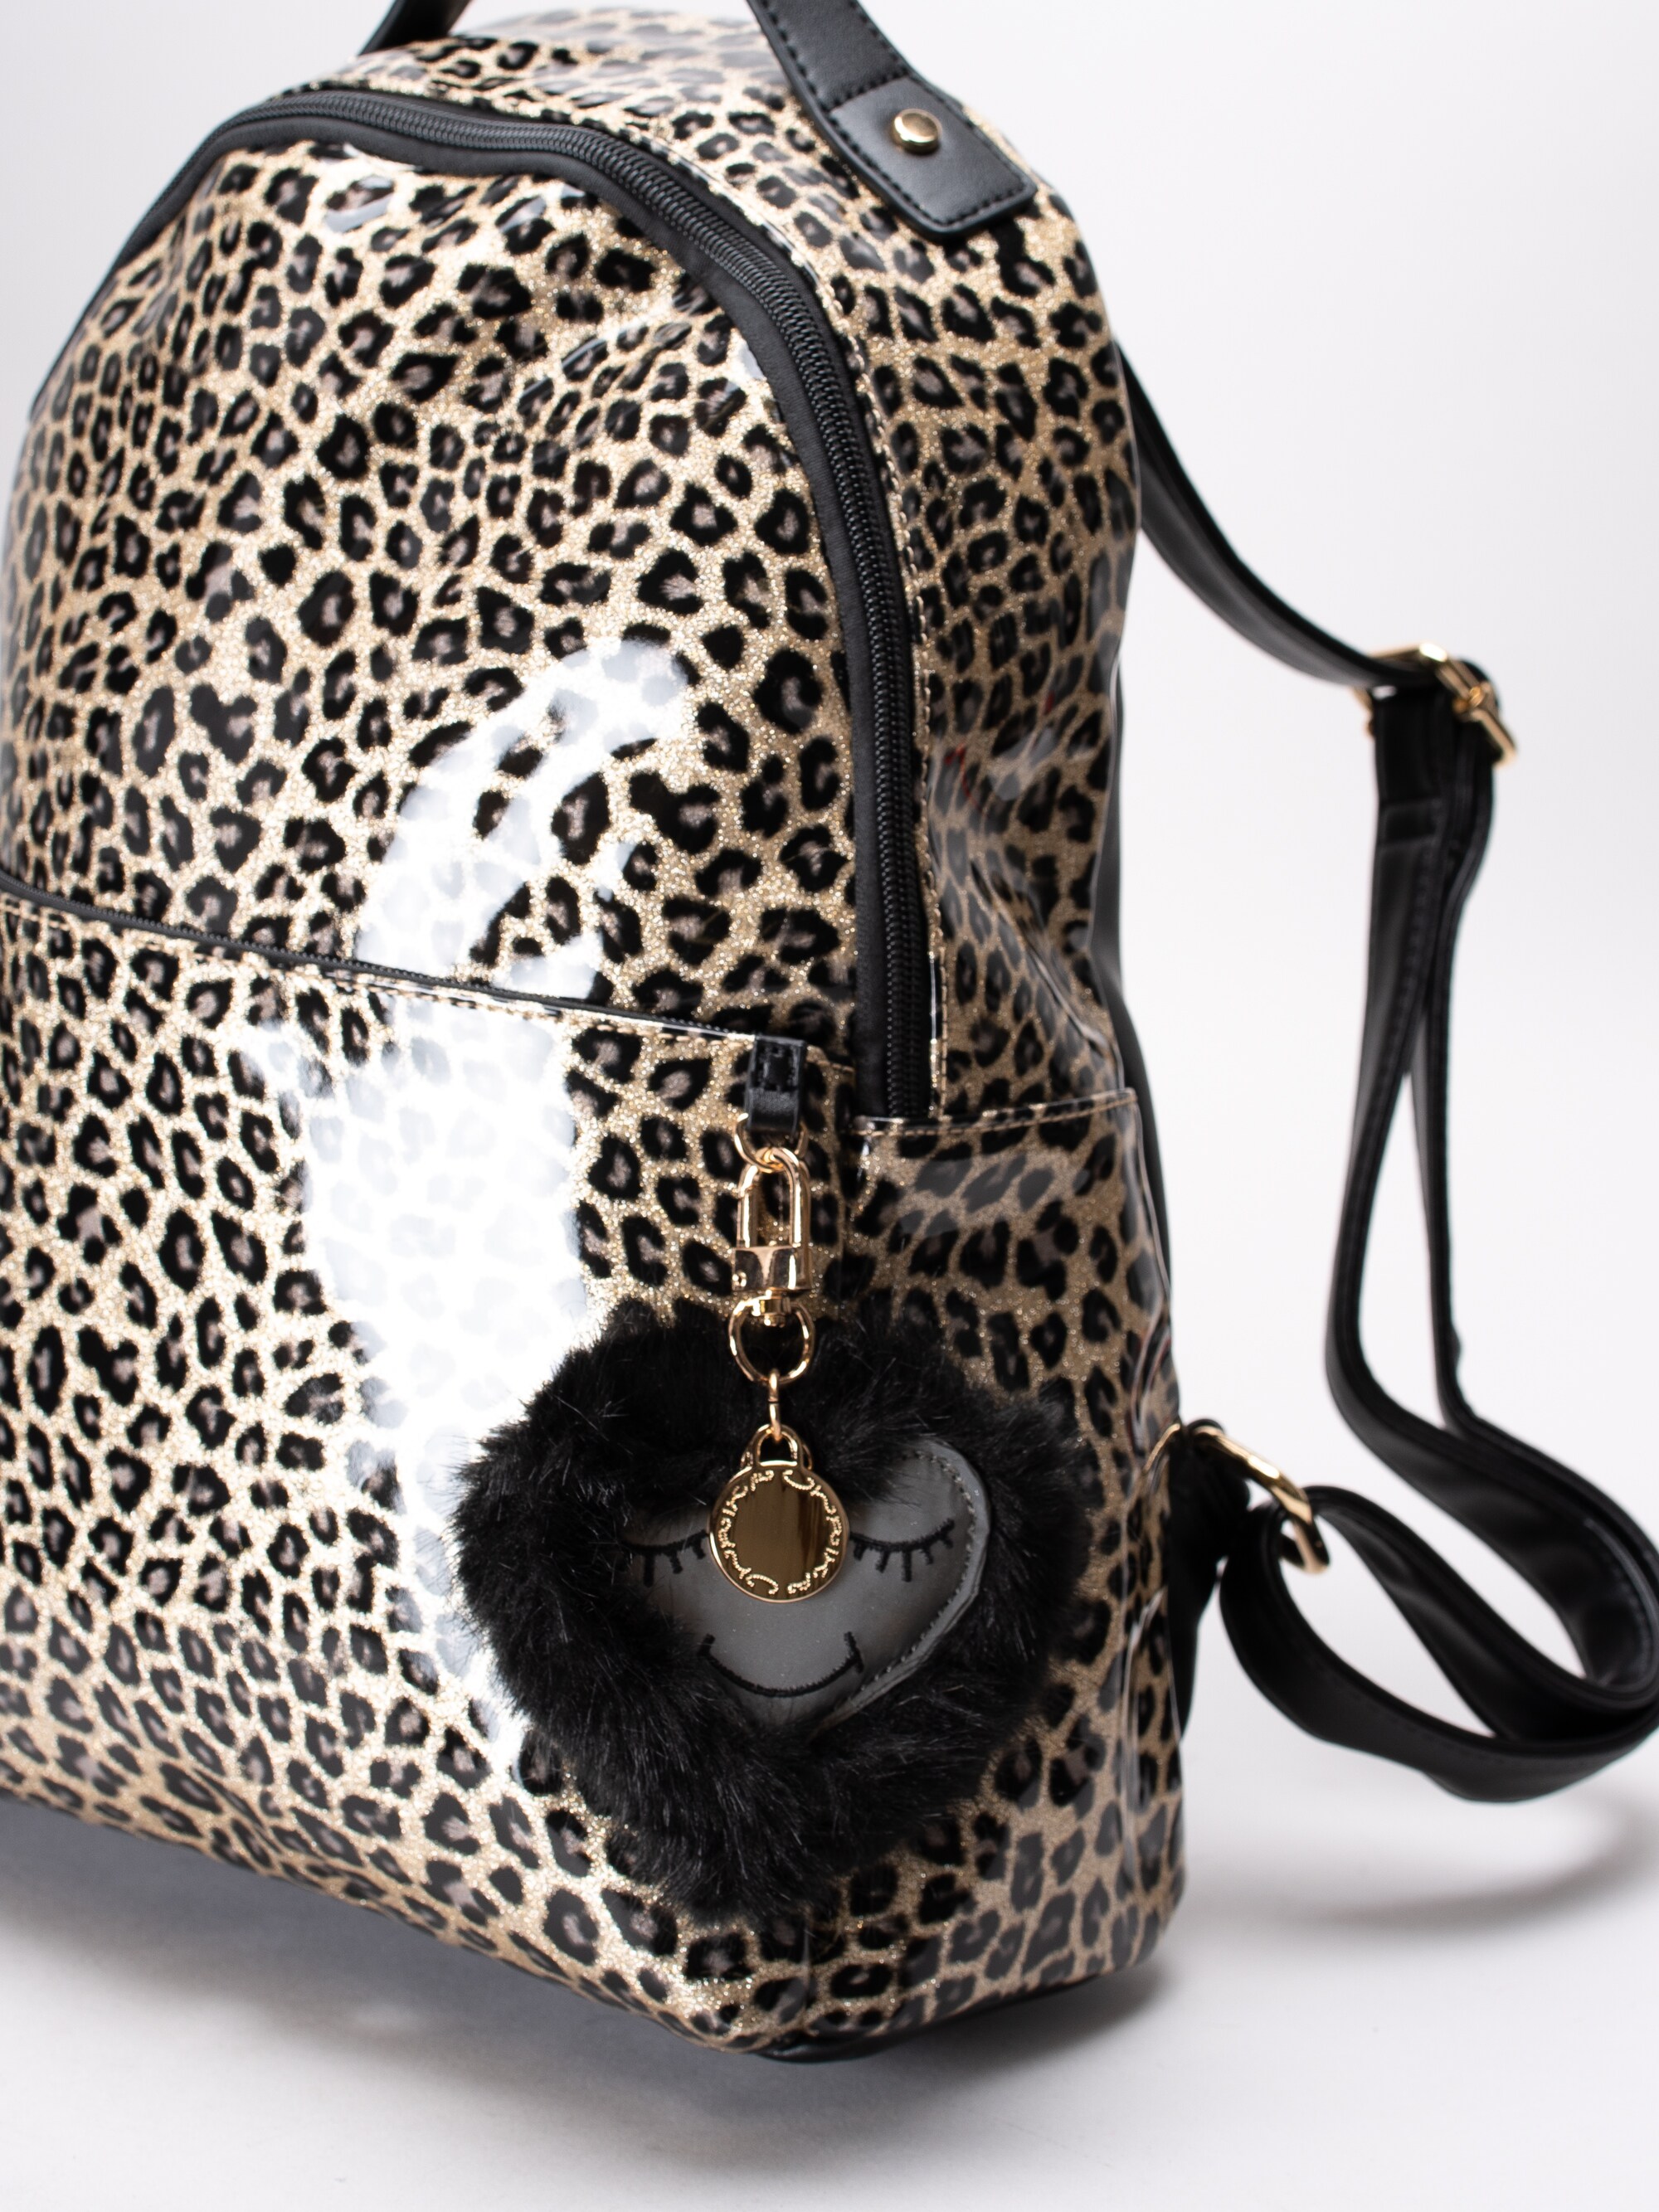 86193024 Ulrika Design 36-5411-7 Wild Kids guld glittrig leopard mönstrad ryggsäck för barn-3